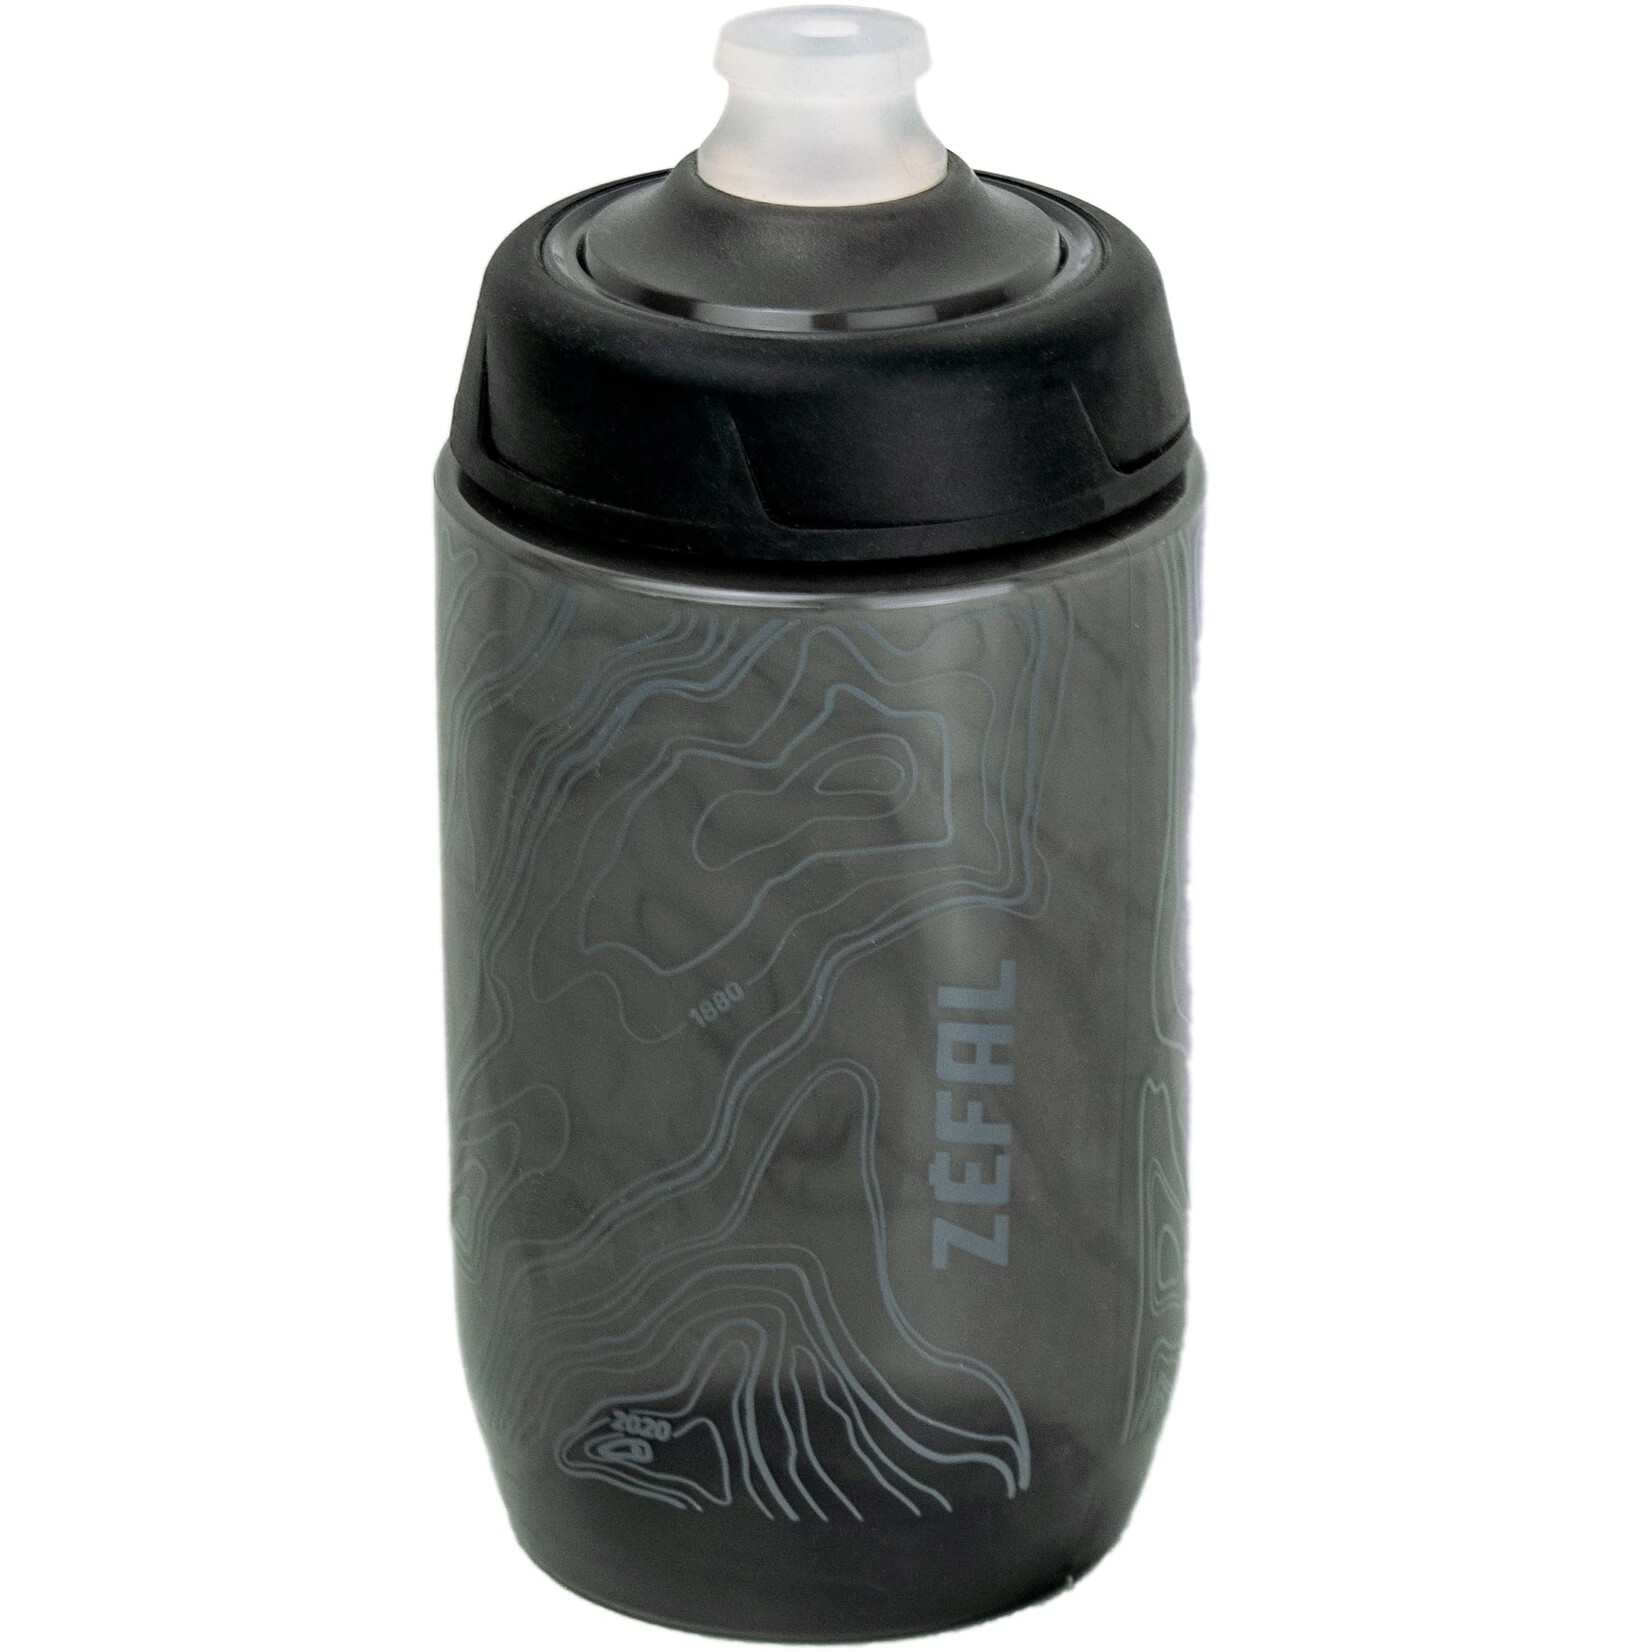 Zefal Sense Pro 50 Water Bottle - Black Grey 500ml